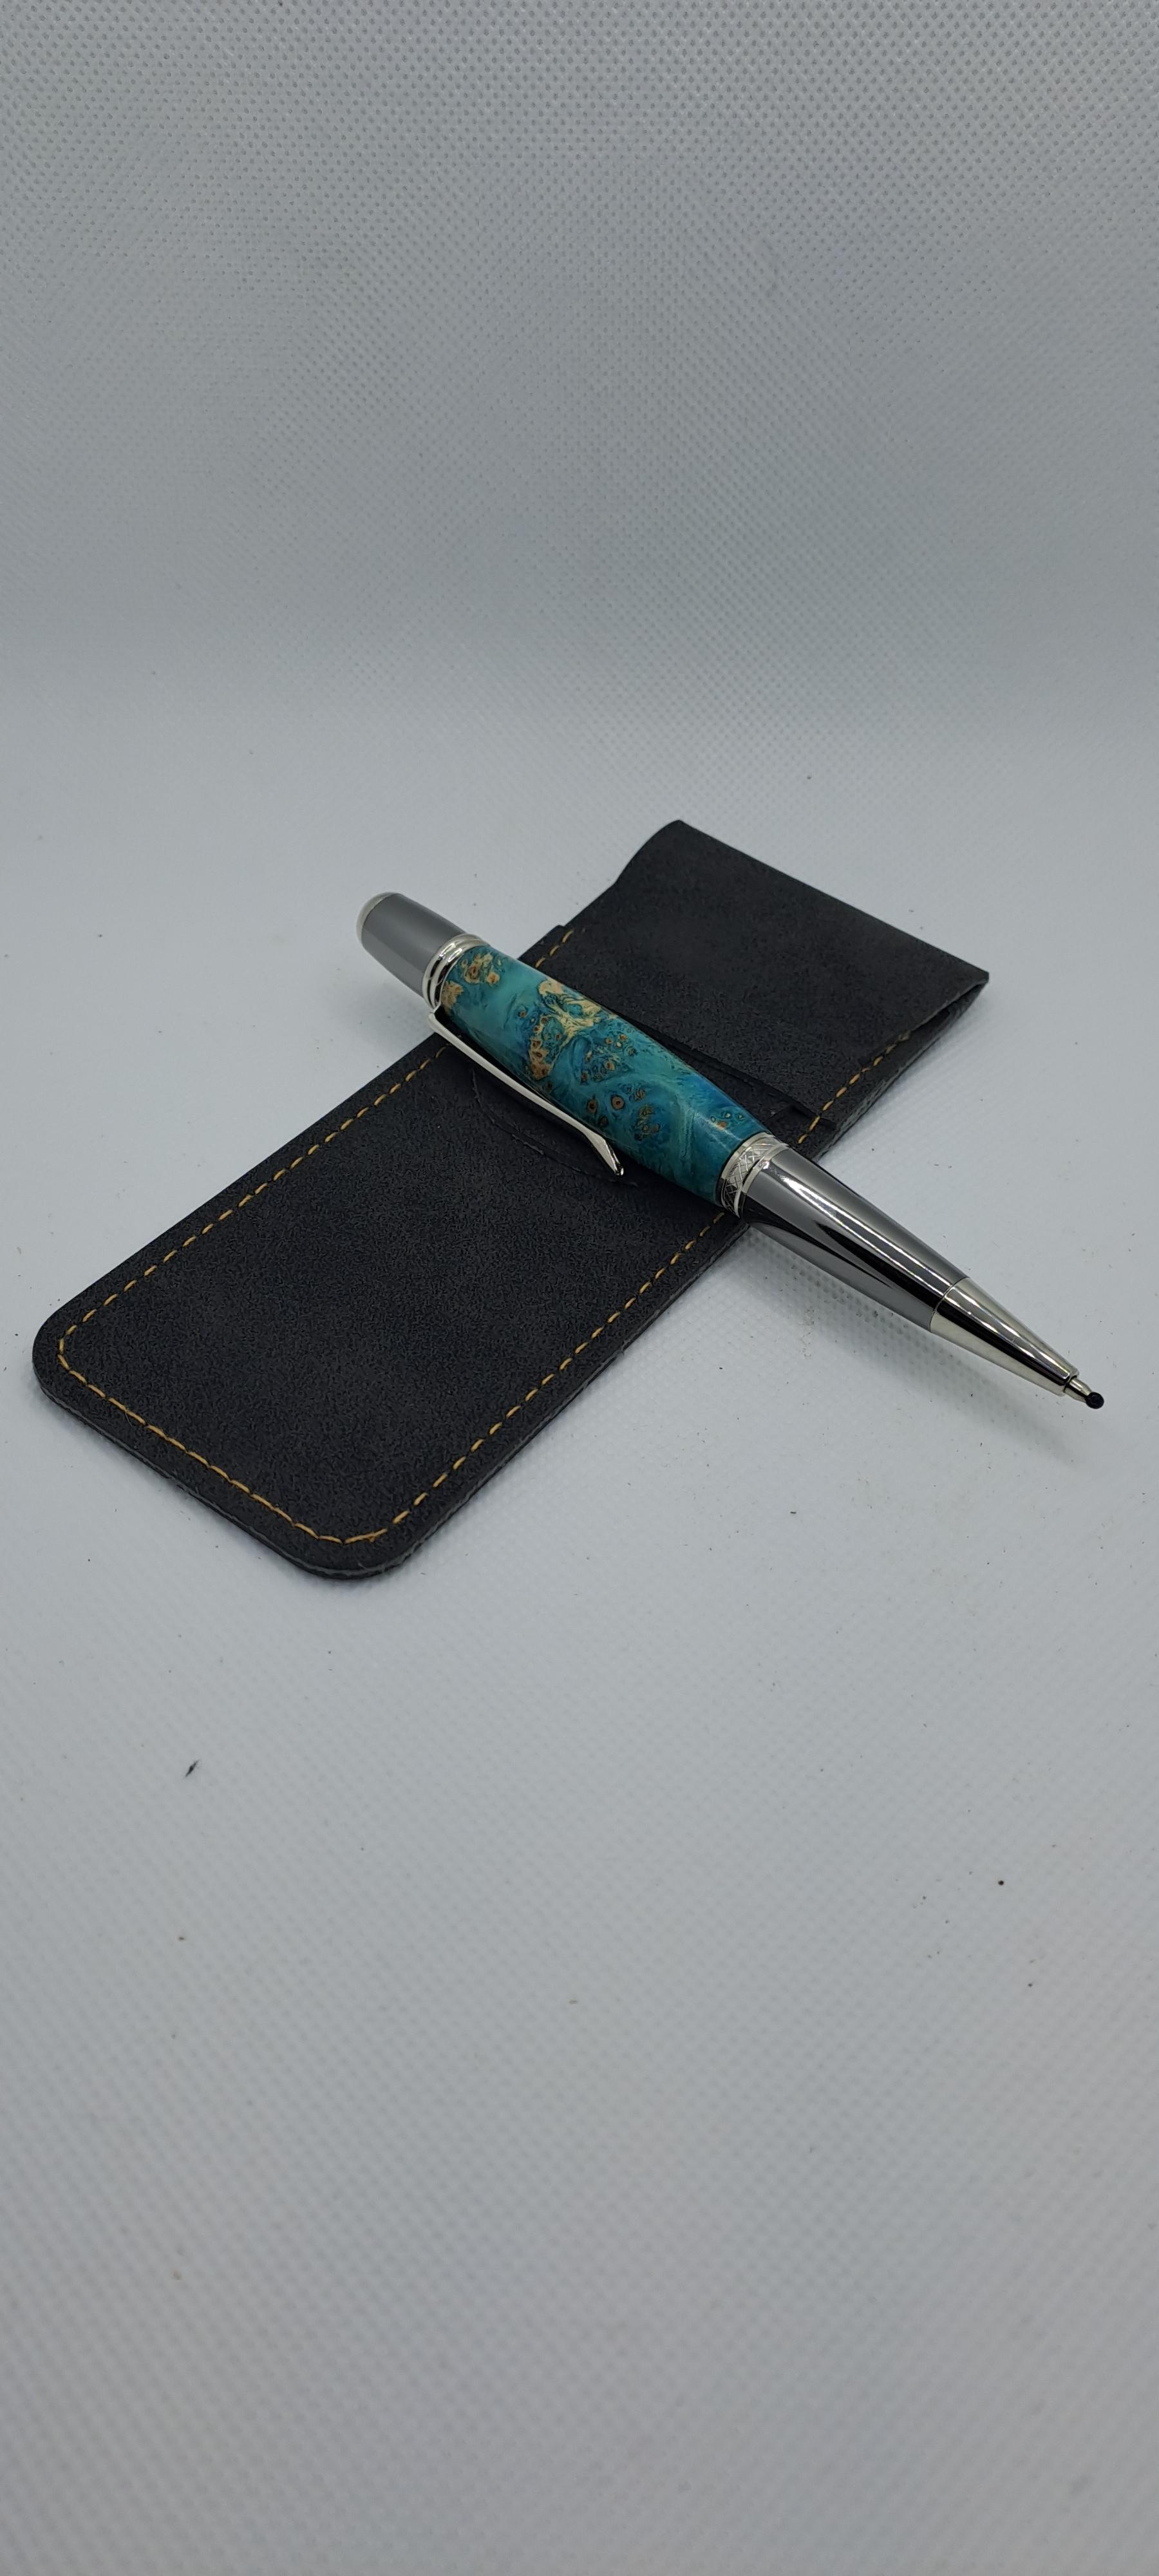 Platinum Venetian pen blue maple burl and black PU leather case